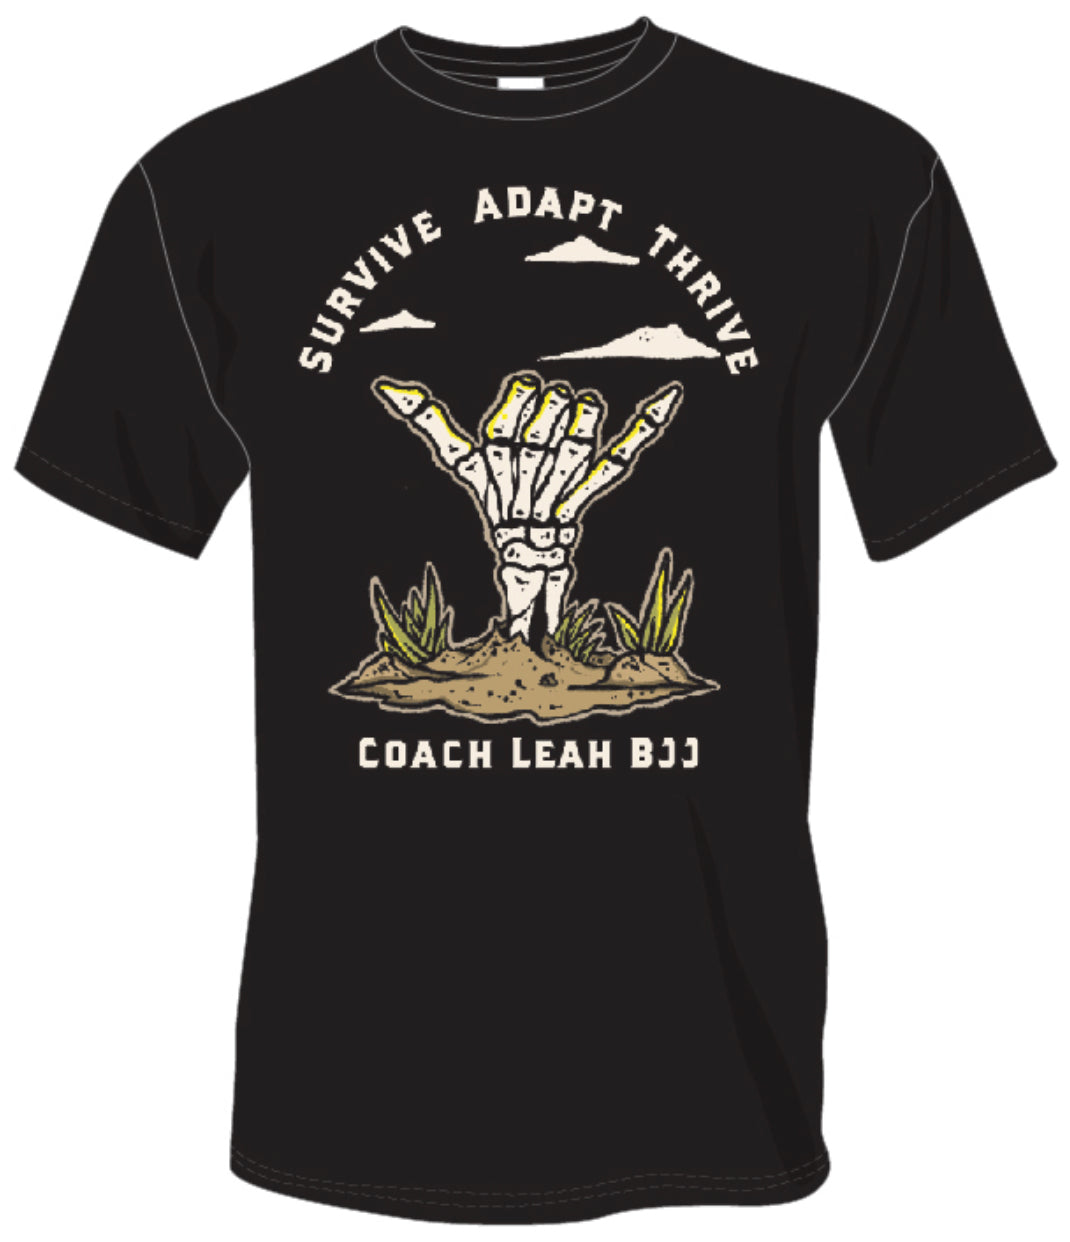 Coach Leah BJJ - Survive - Adapt - Thrive